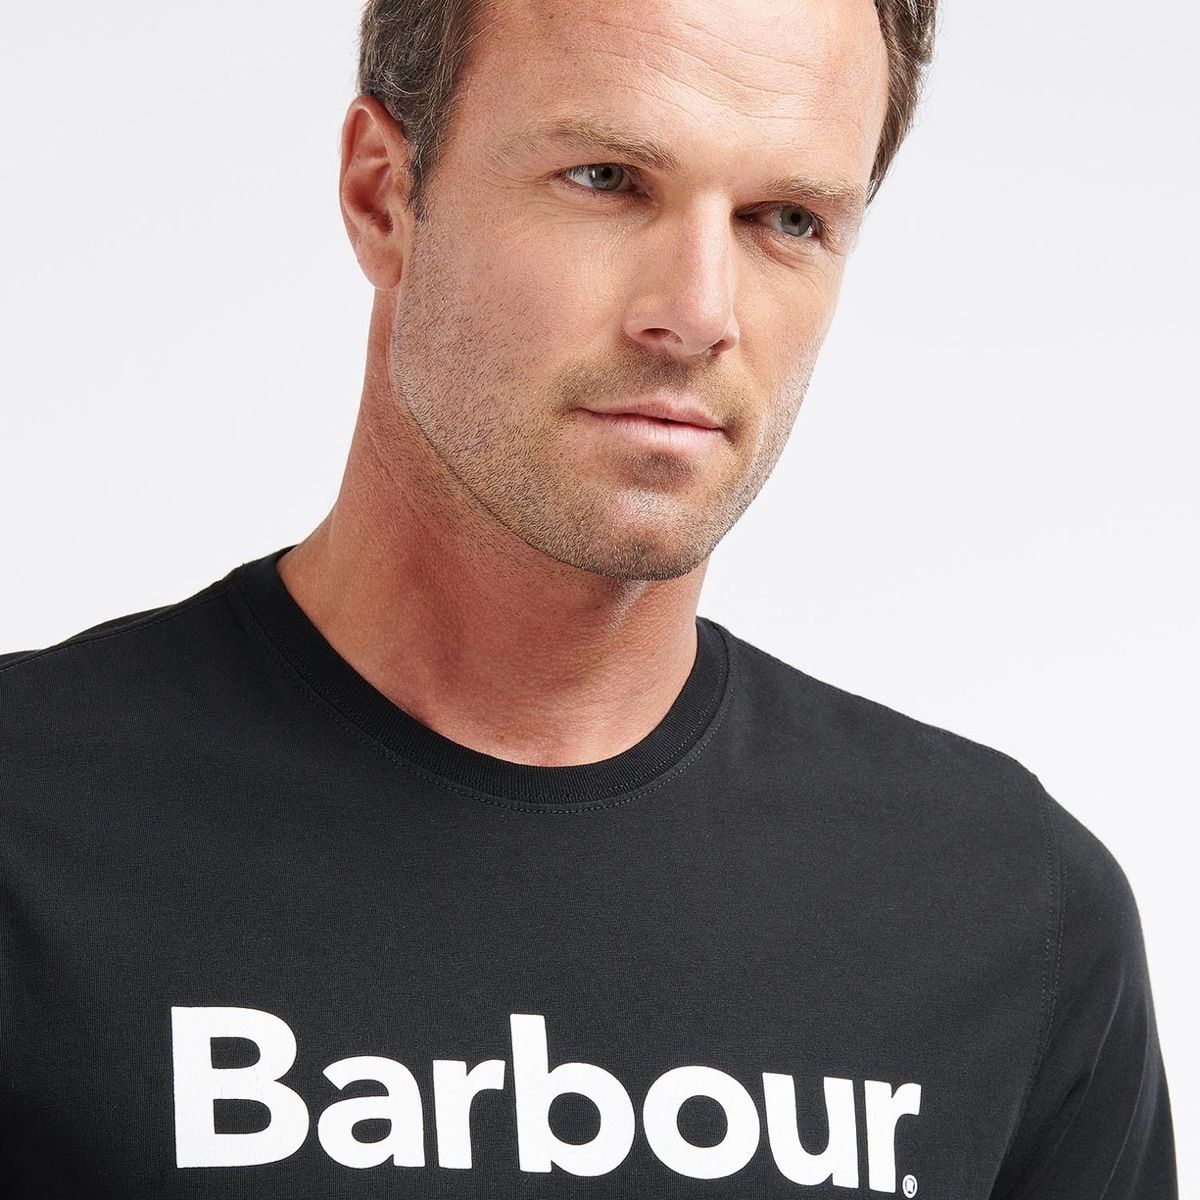 Barbour Men's Logo T-Shirt | Black